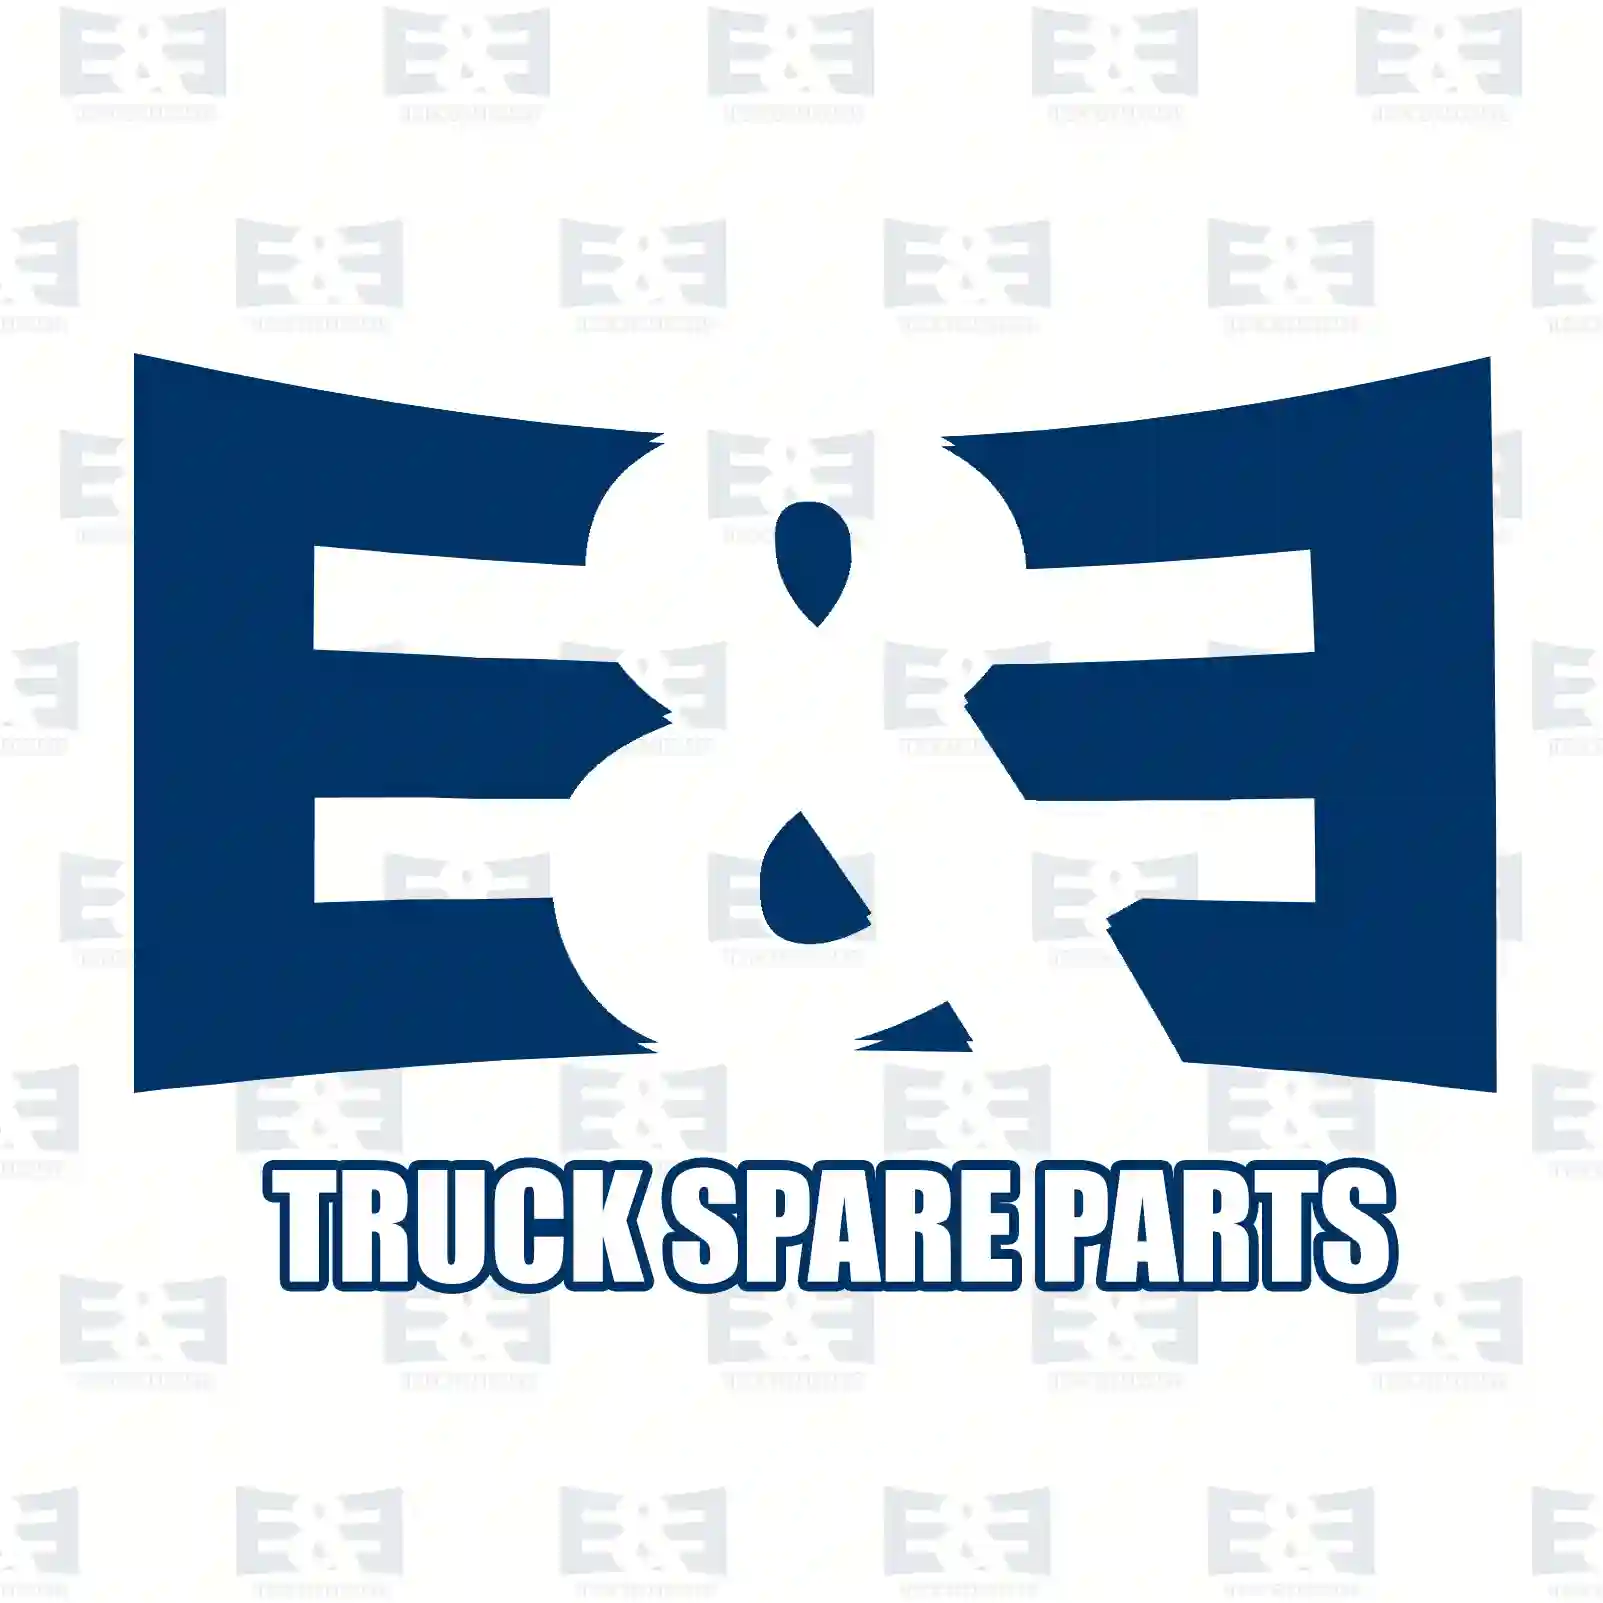 Hand Brake Valve Hand brake valve, EE No 2E2296882 ,  oem no:1518237, 81523156156, 81523156160, 81523156161, 81523156162, 81523156171, 81523156181, 81523156208, 81523159156, 1935570 E&E Truck Spare Parts | Truck Spare Parts, Auotomotive Spare Parts